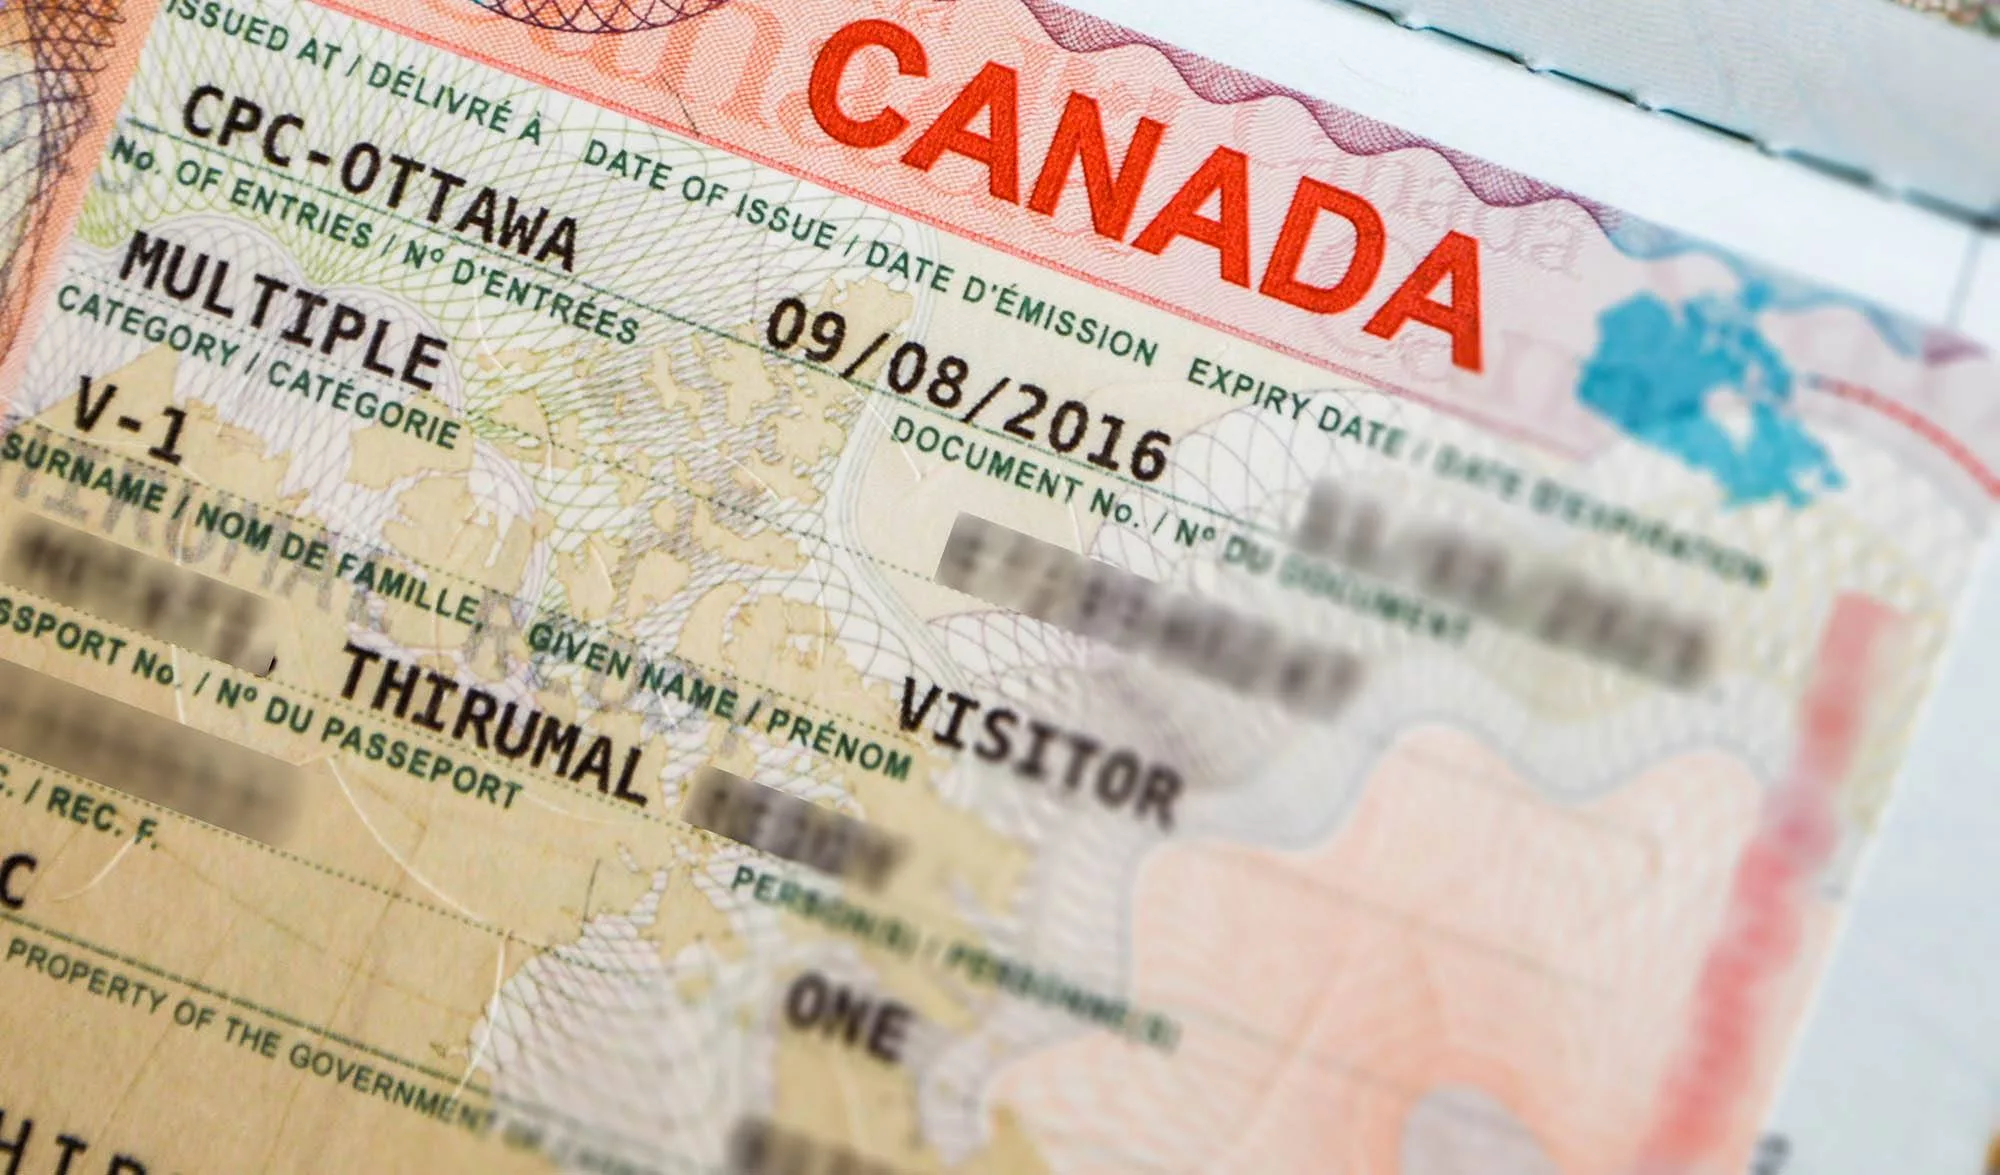 canada tourist visa image 1 jpg